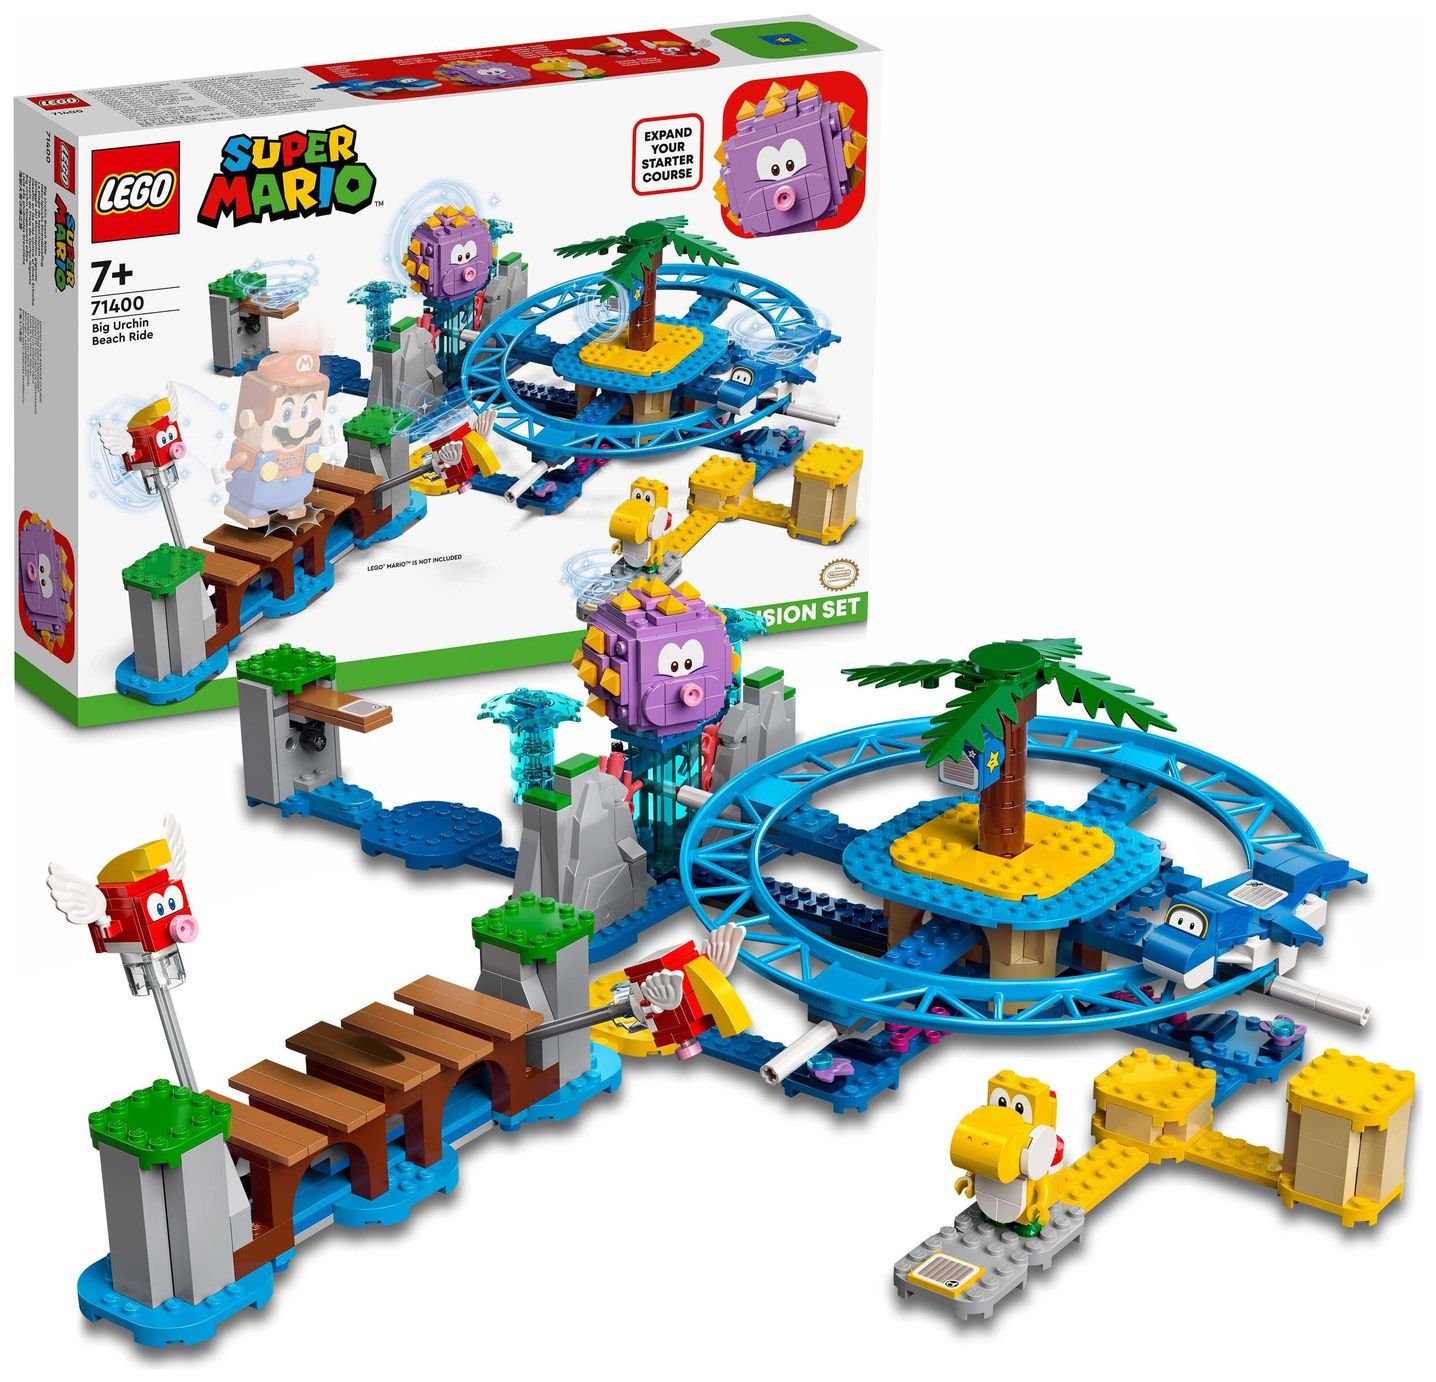 LEGO Super Mario Big Urchin Beach Ride Expansion Set 71400